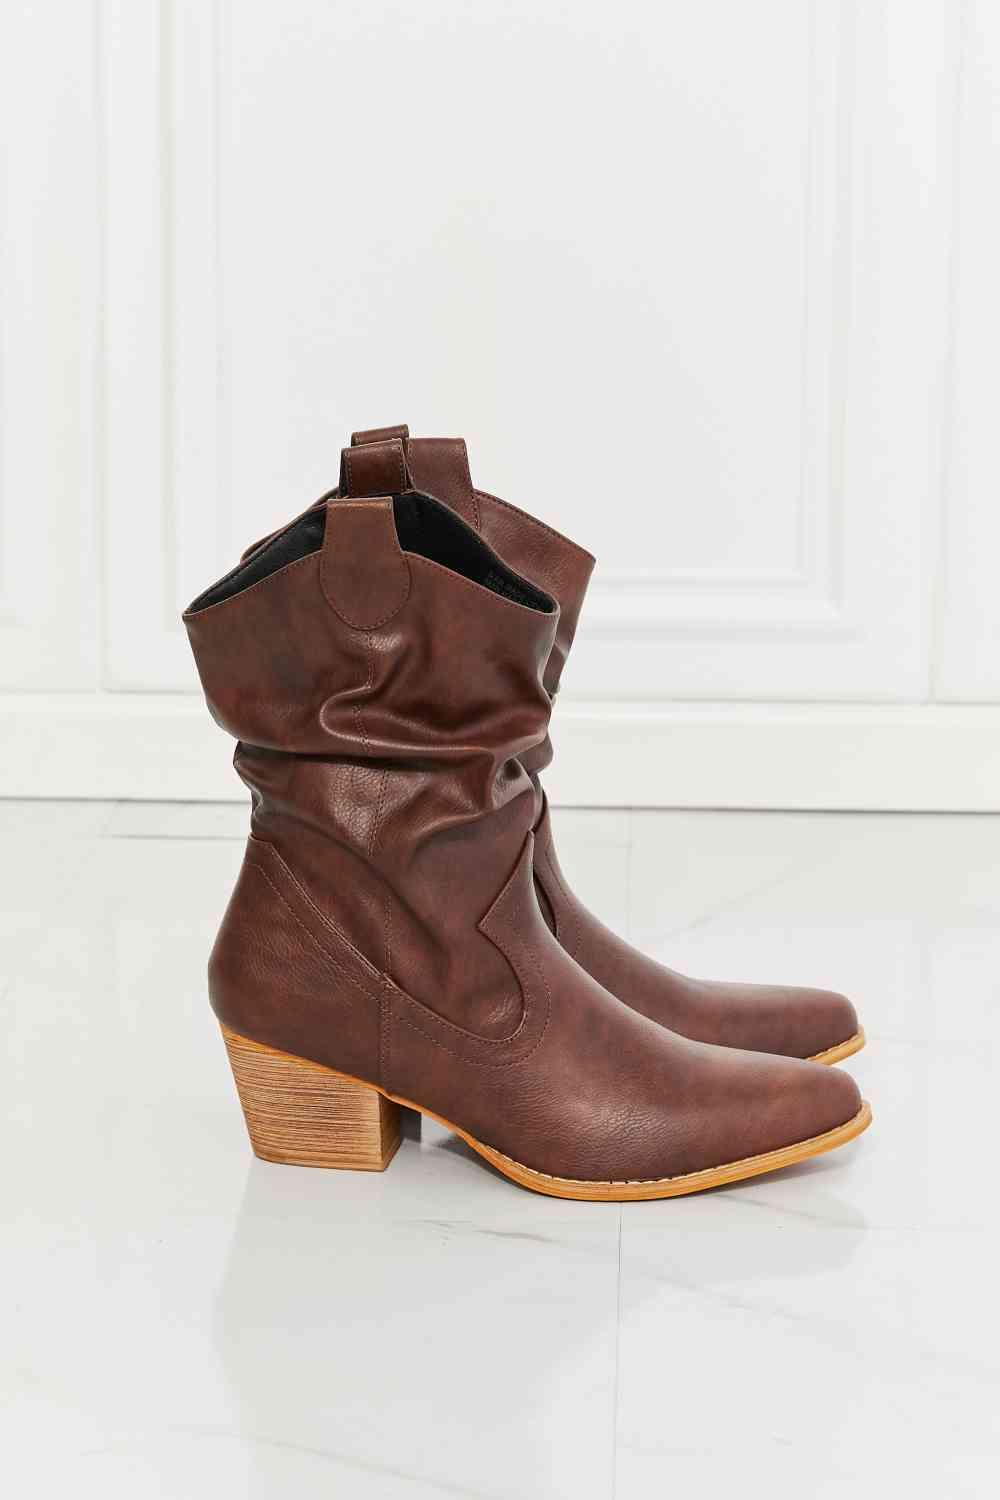 MMShoes Better in Texas Scrunch Cowboy Boots in Brown - Closet of Ren